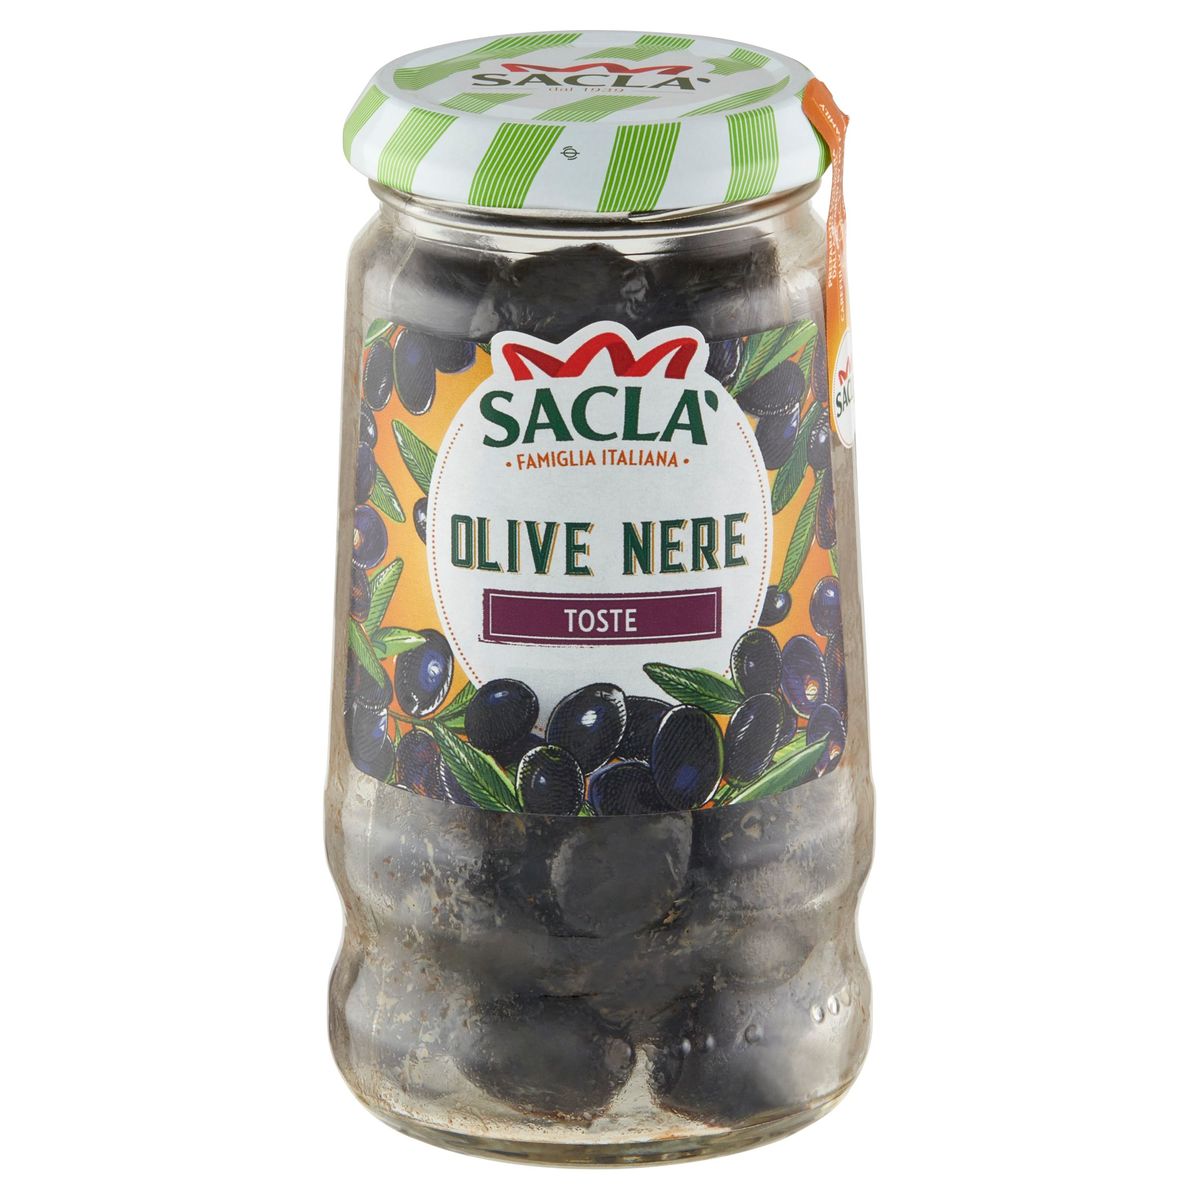 Sacla Olive Nere Toste 200 g